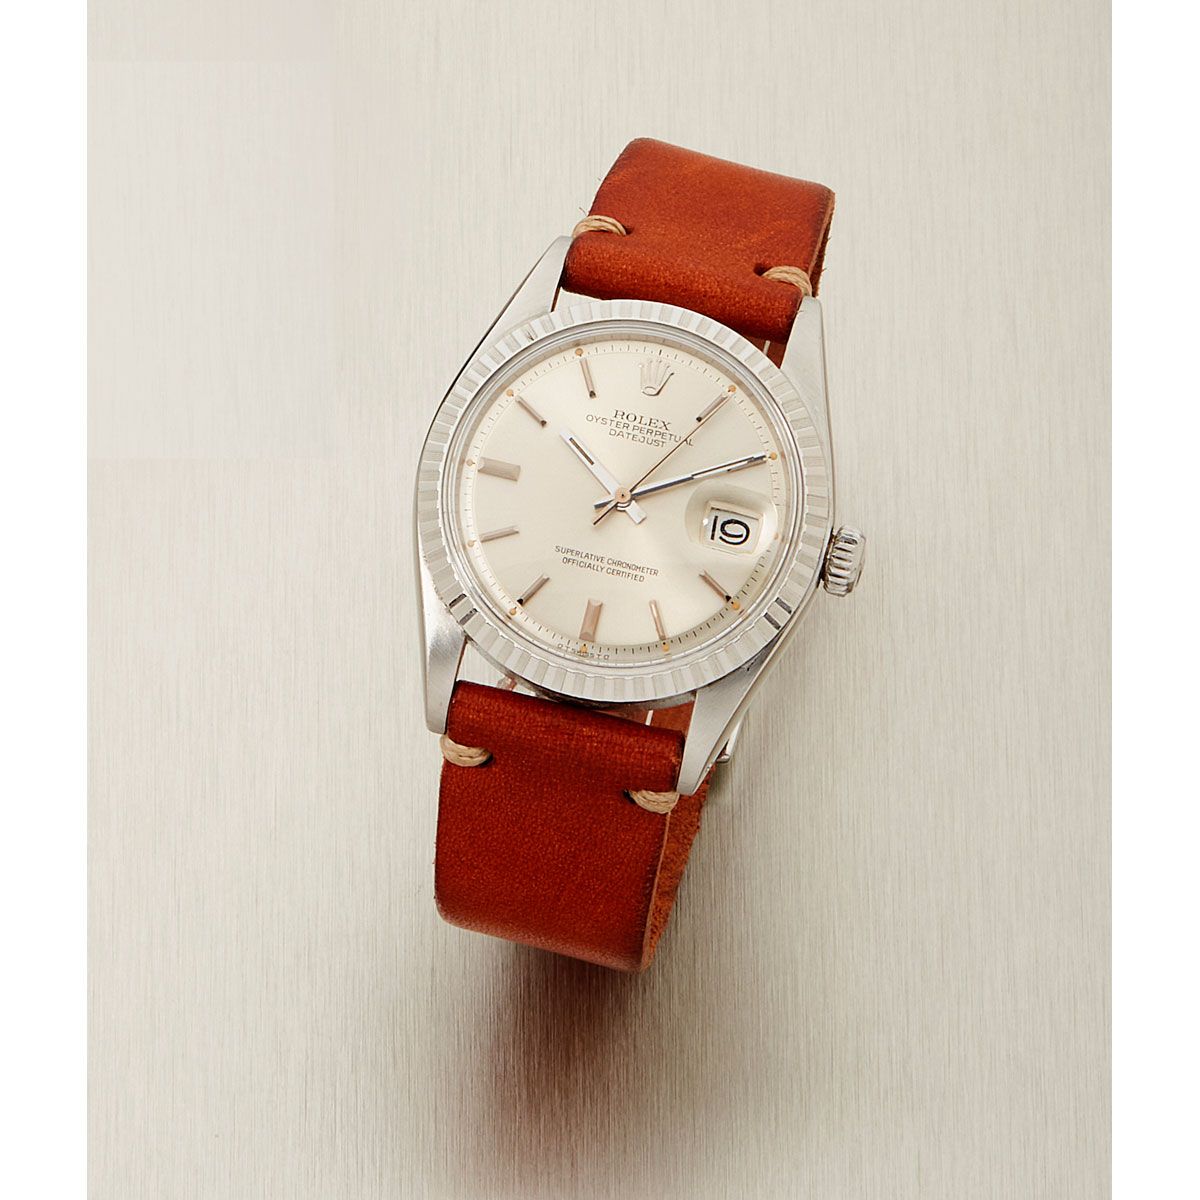 Null Rolex, Datejust, Ref. 1601, #3547xxx, circa 1973.

A beautiful steel watch,&hellip;